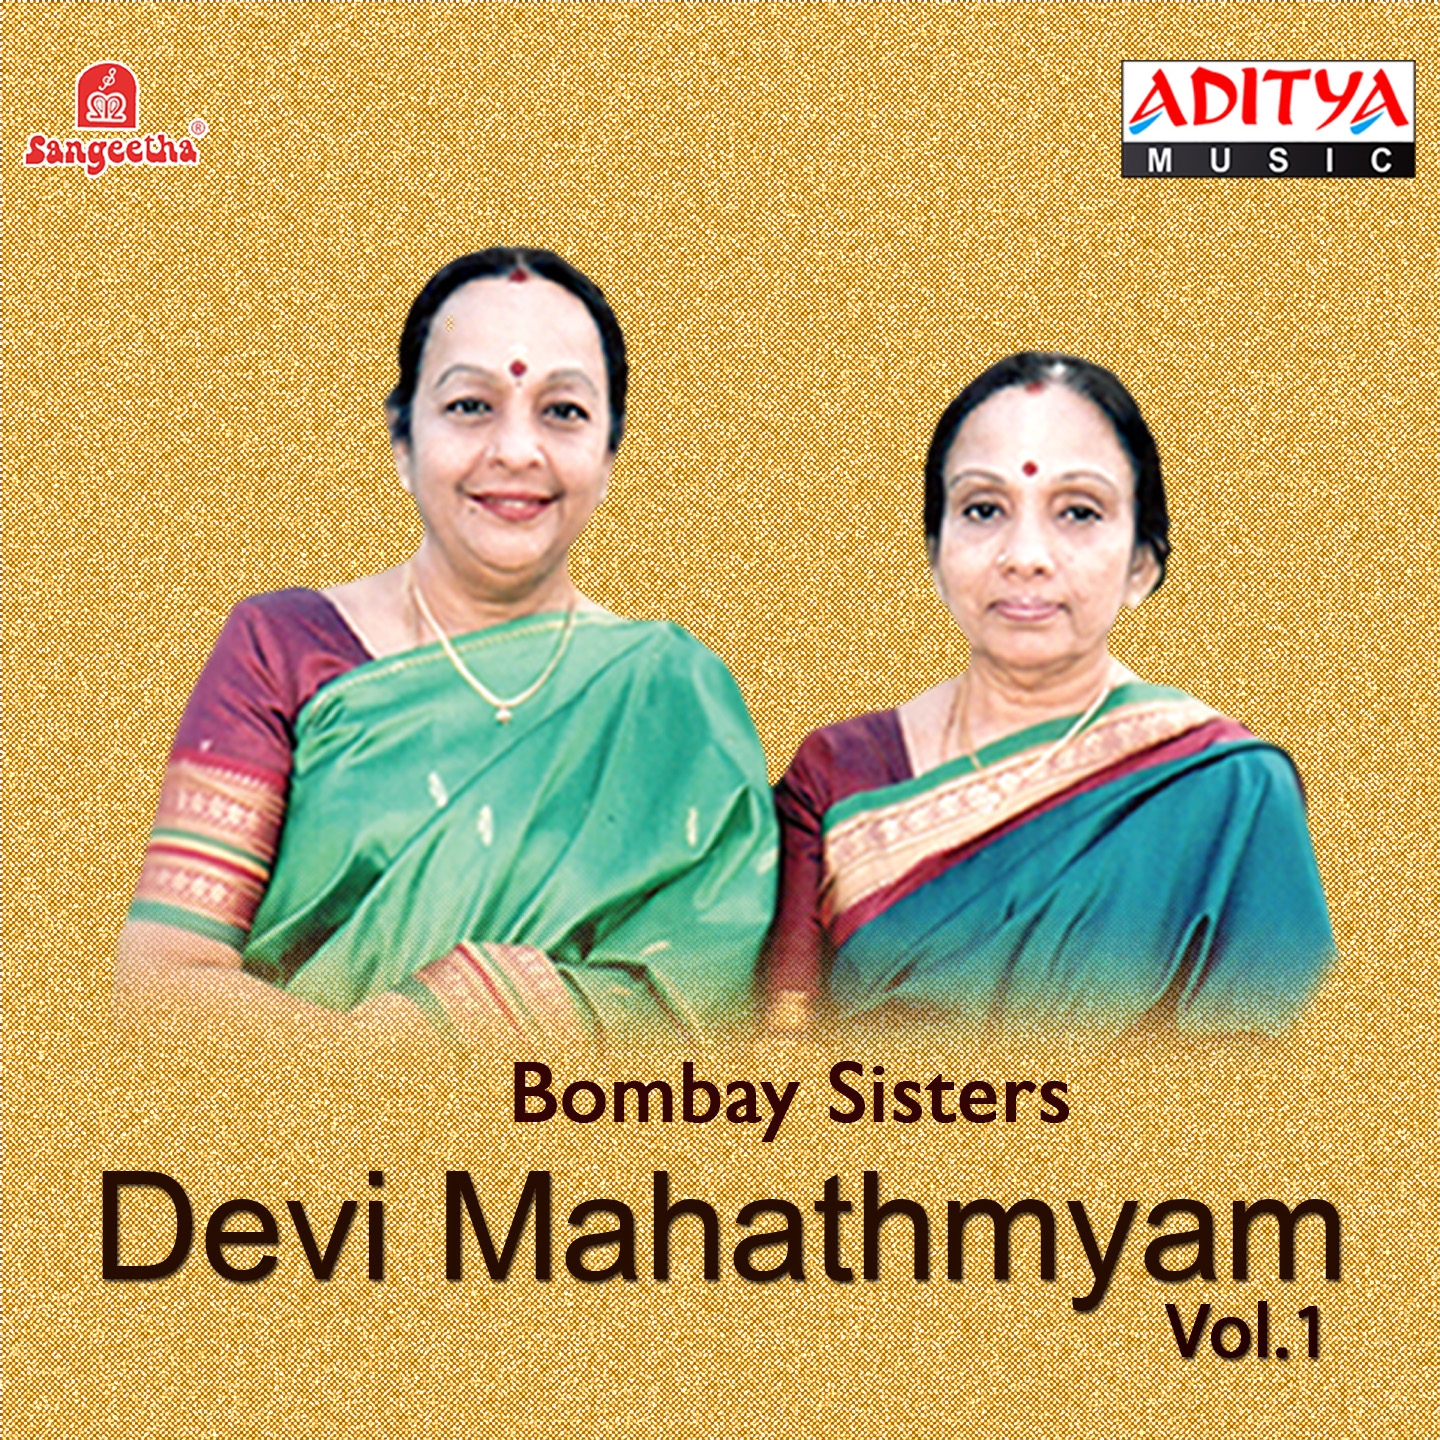 Devi Mahathmyam, Vol. 1